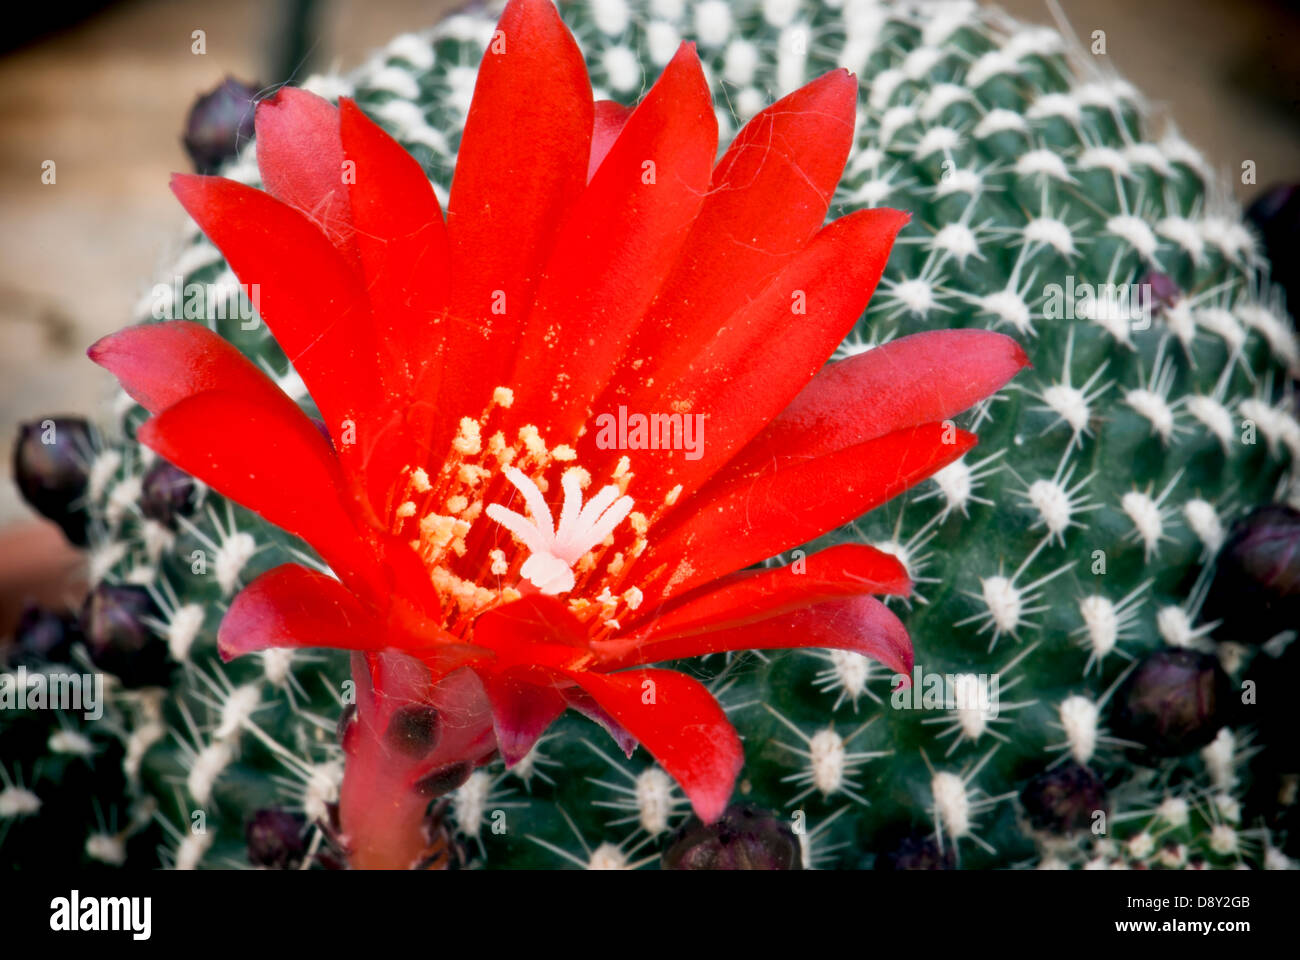 Flowering cactus rebutia deminuta with red flower. Stock Photo